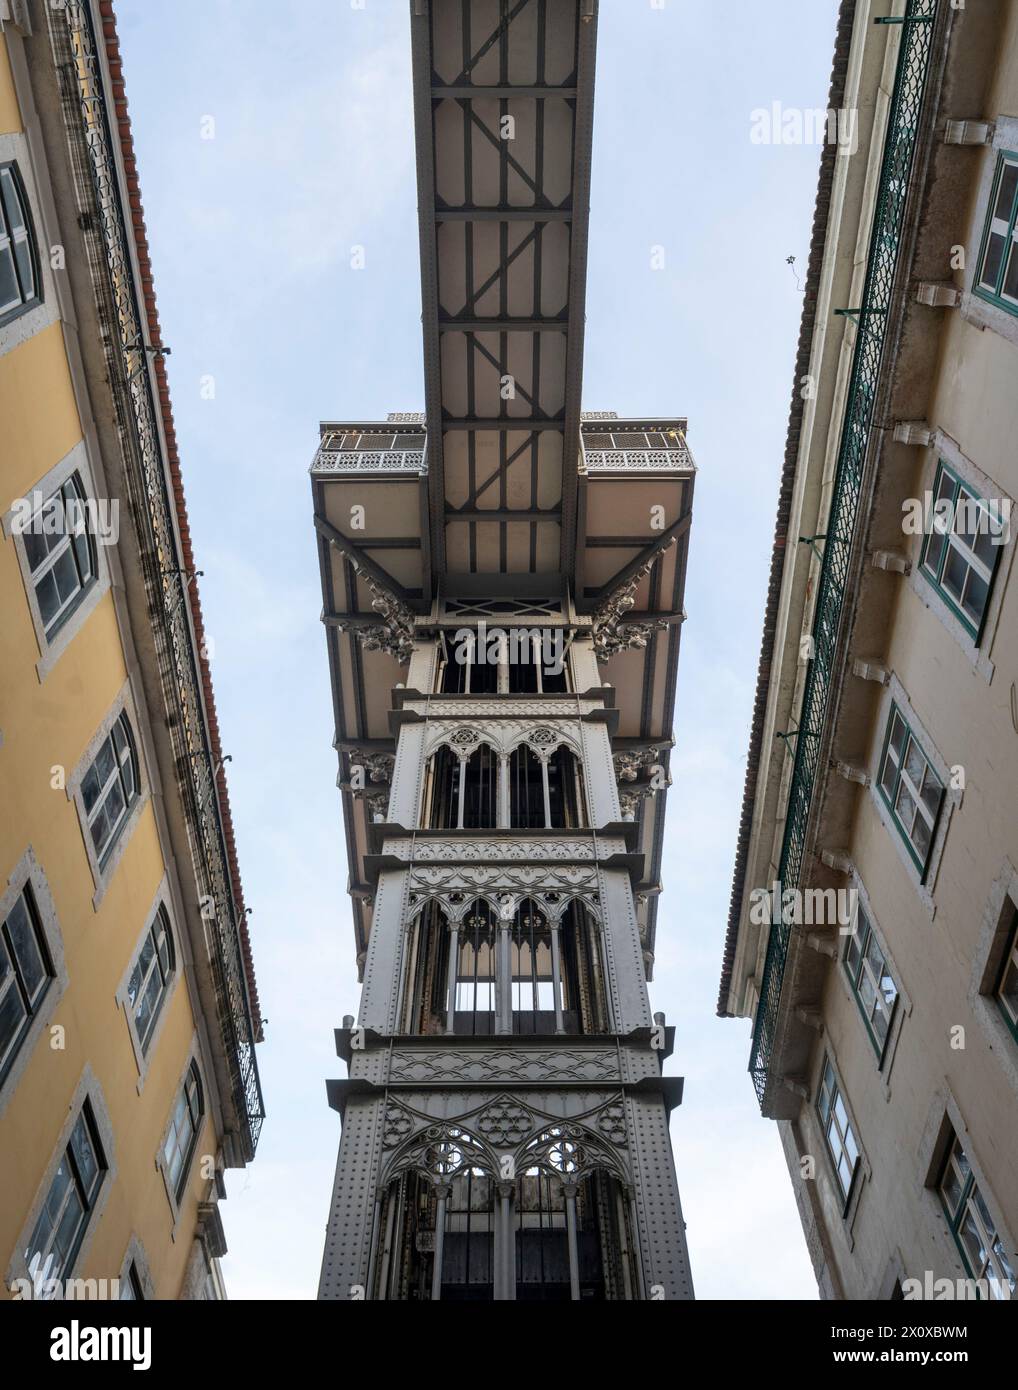 Lissabon, Elevador de Santa Justa, Aufzug in die Oberstadt Bairro Alto, 1902 nach Plänen des Ingenieurs Raoul Mesnier de Ponsard erbaut Banque D'Images